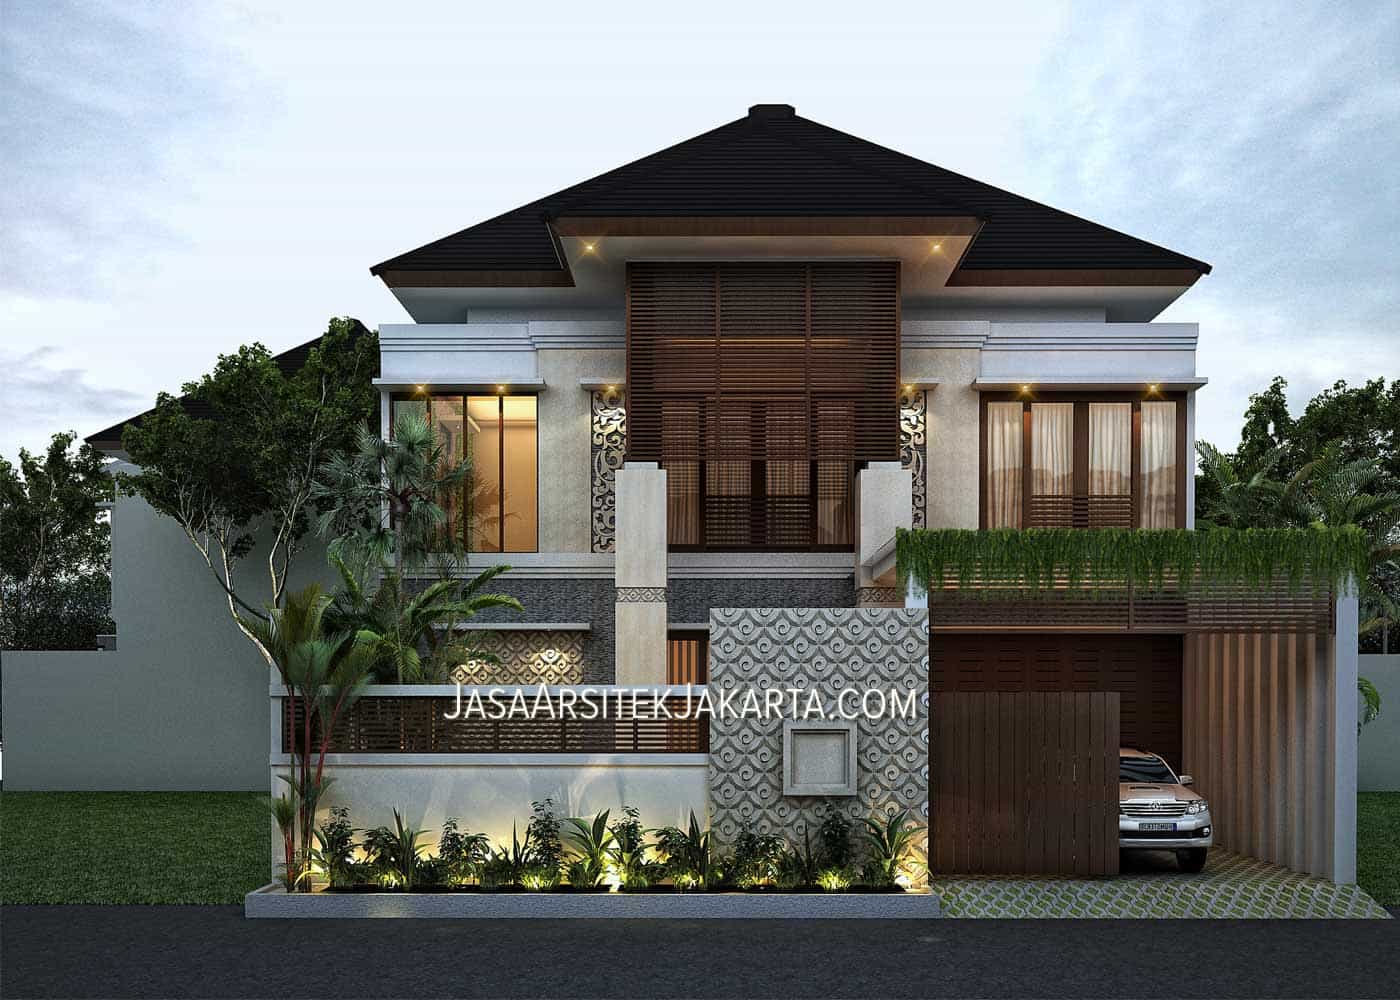 Desain Rumah Mewah luas 900m2 milik bu Hasan Jakarta - Jasa Arsitek jakarta